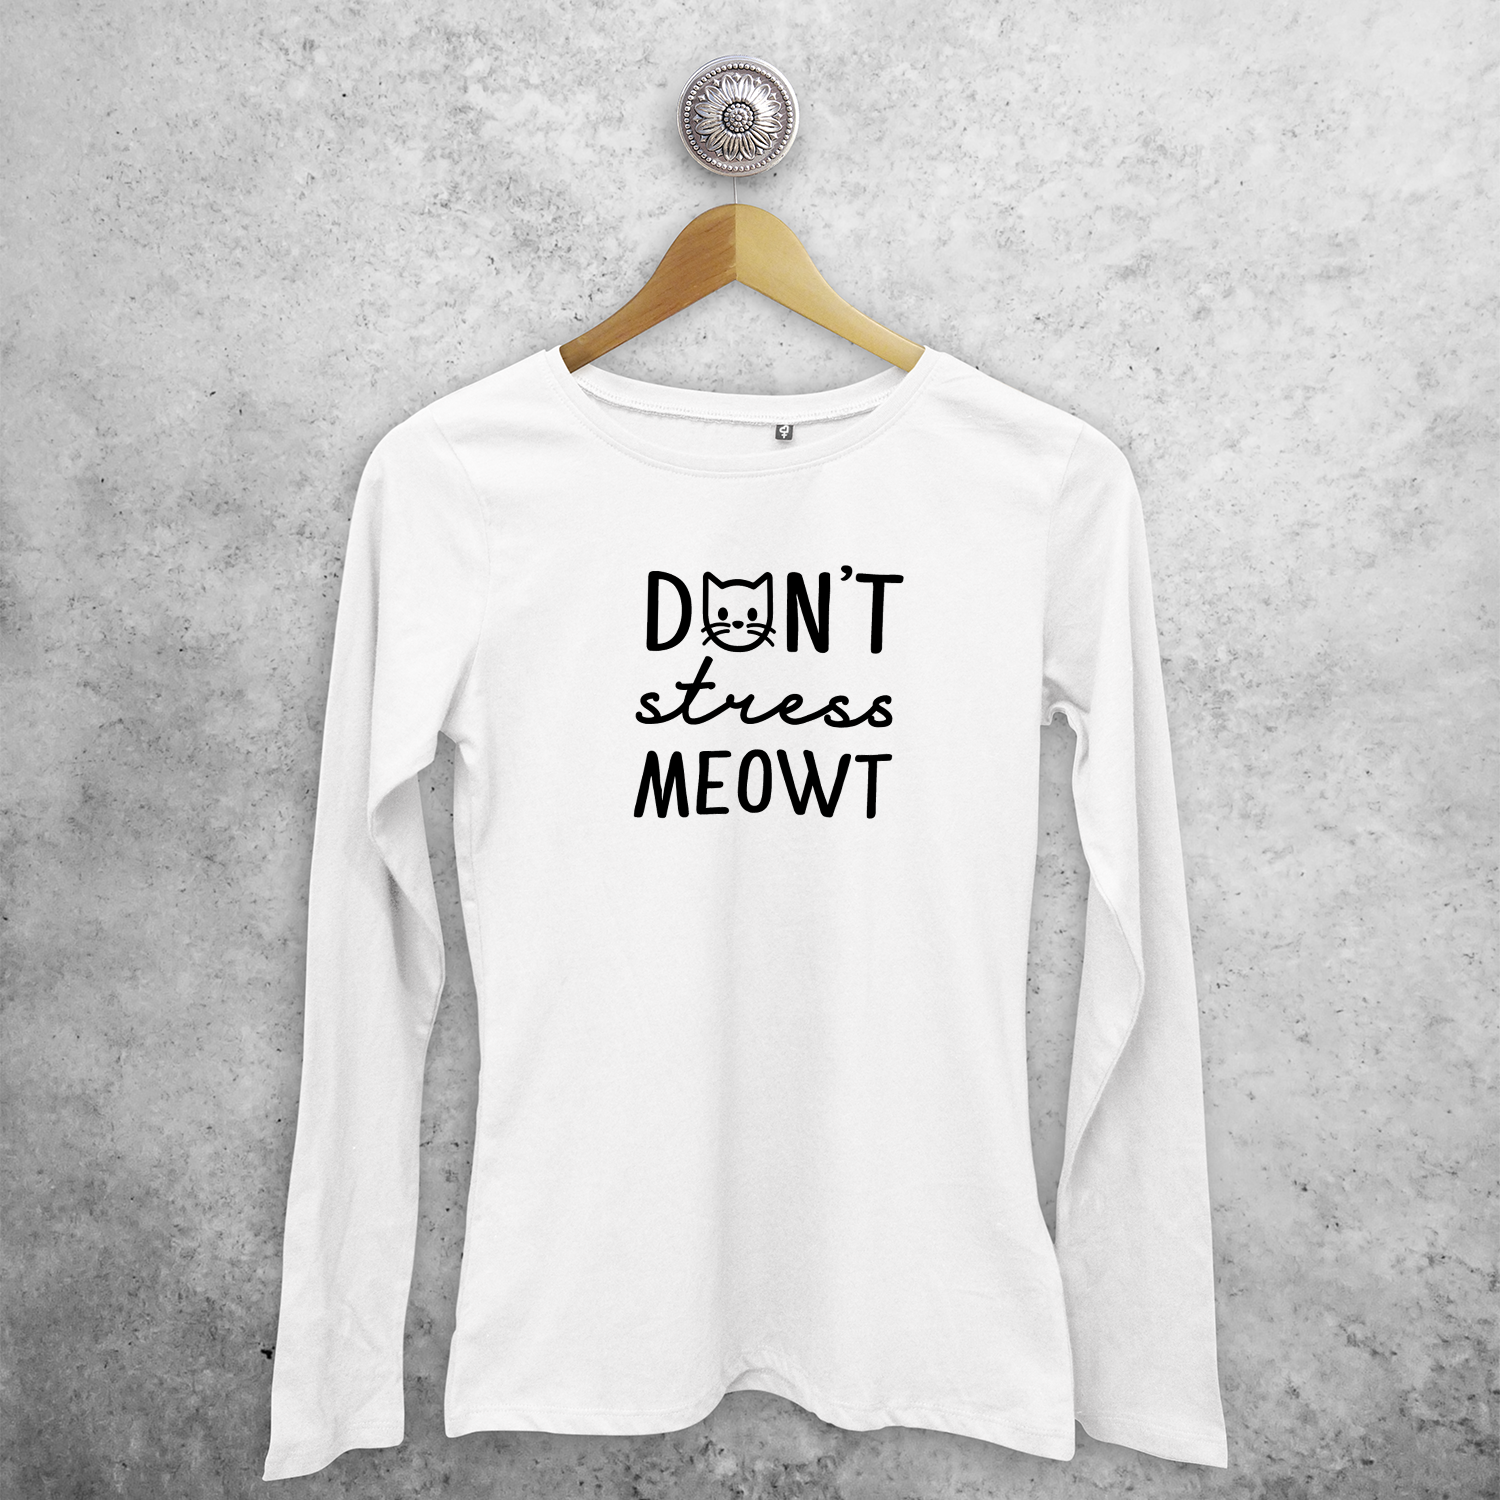 'Don't stress meowt' adult longsleeve shirt